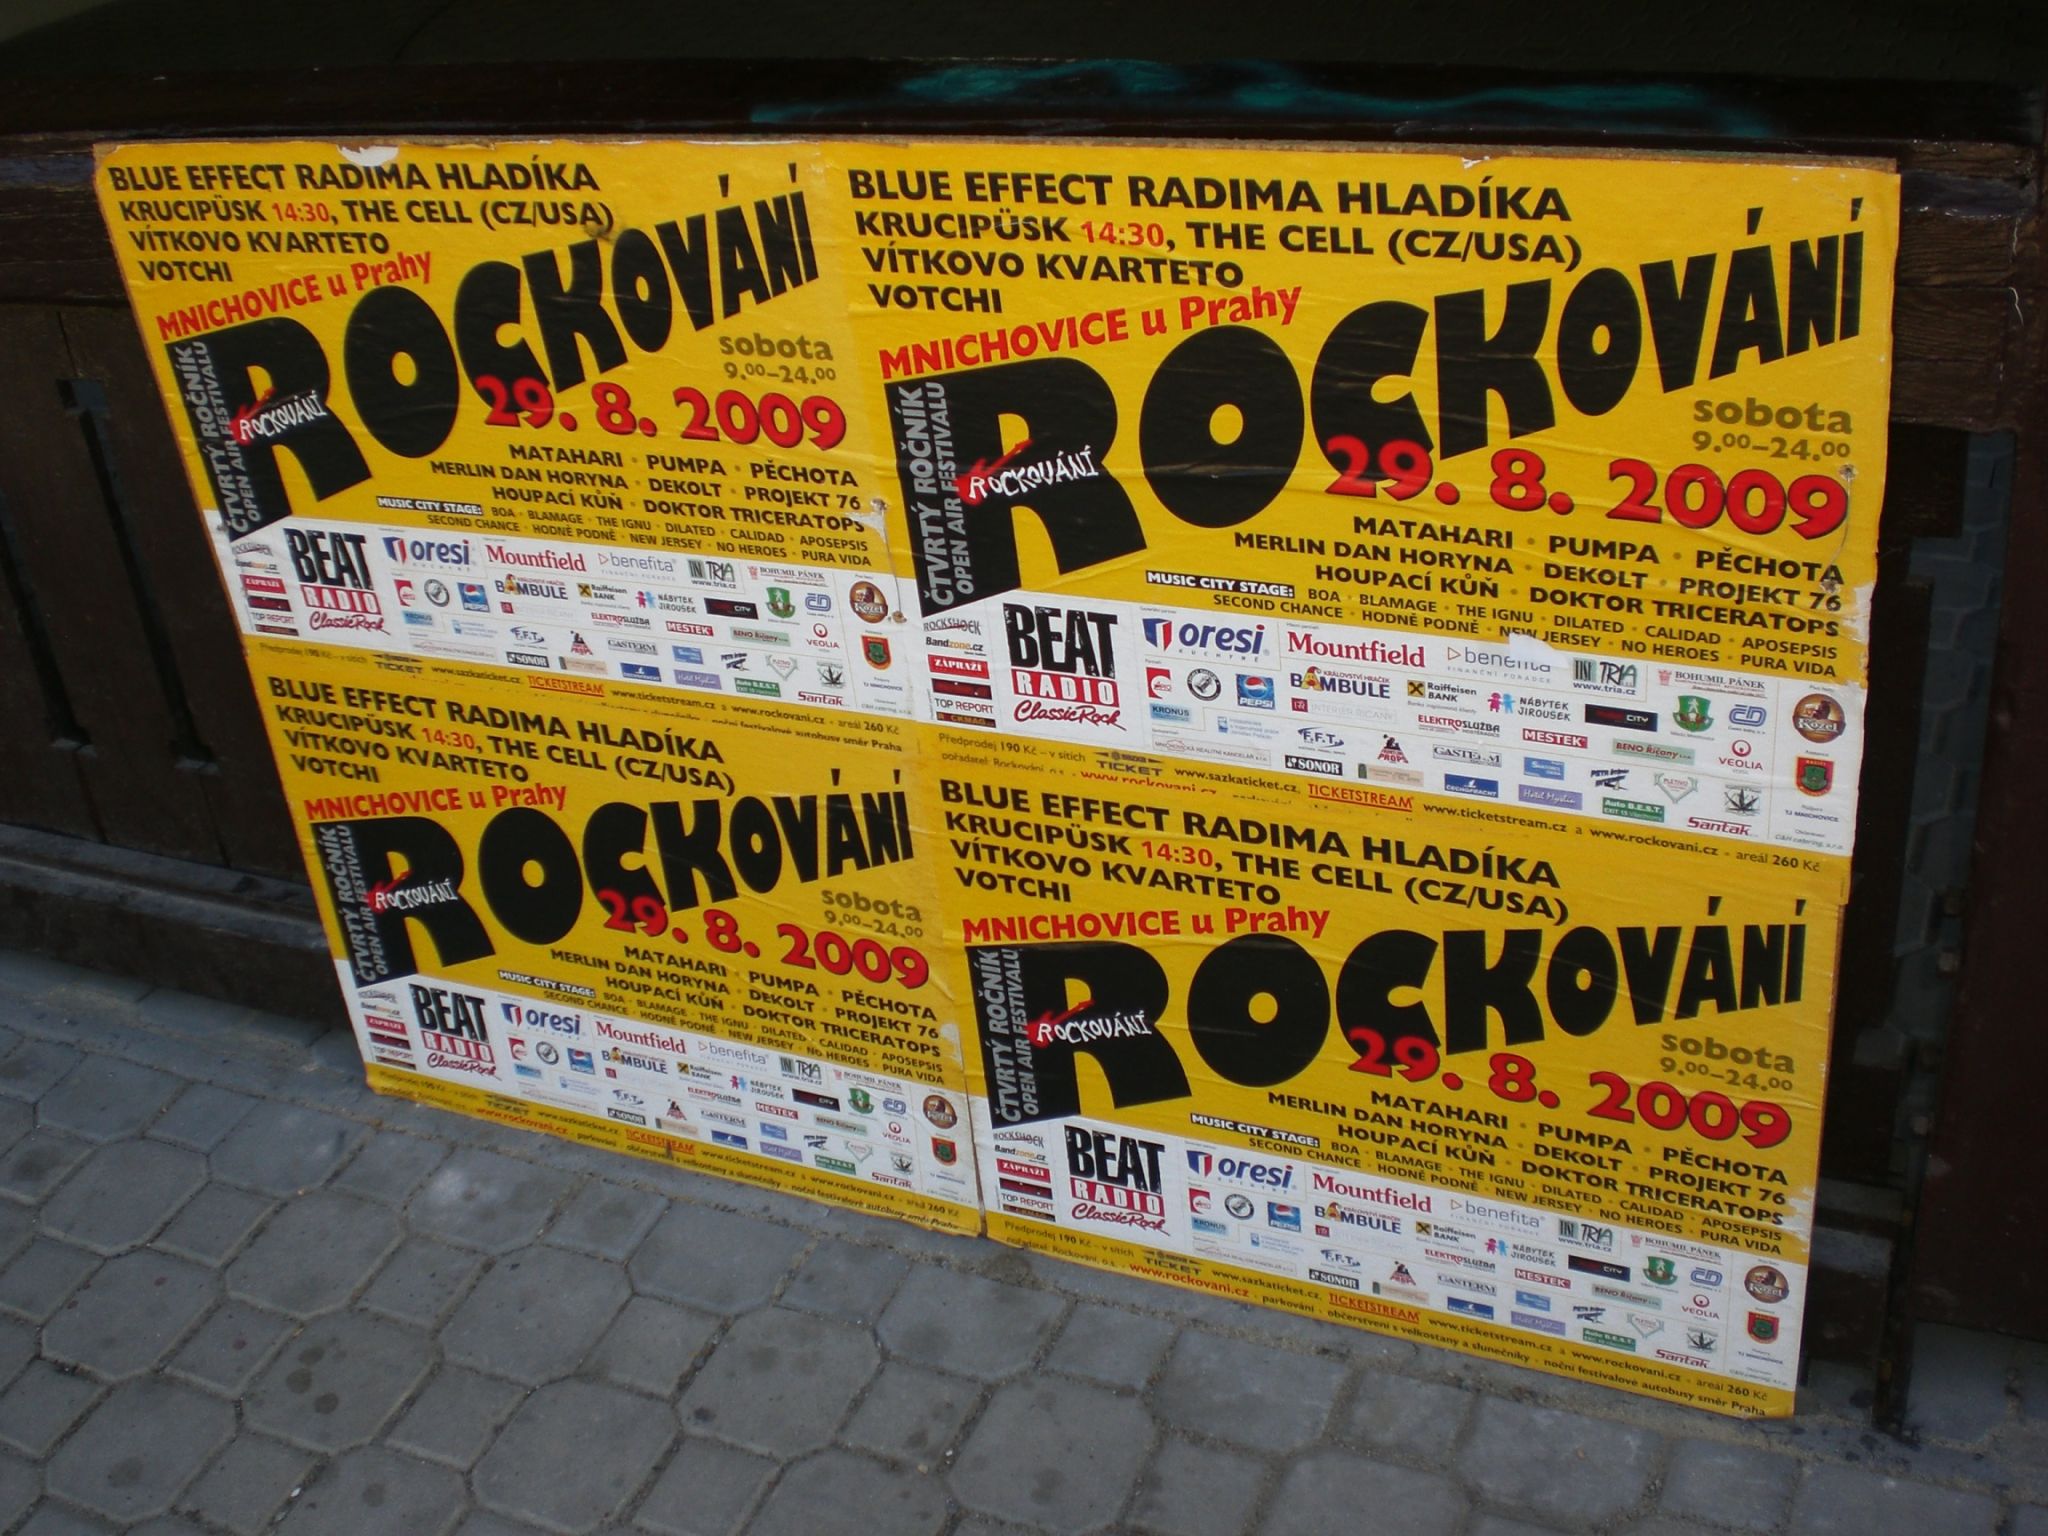 Rockovani 28 augustus 2009